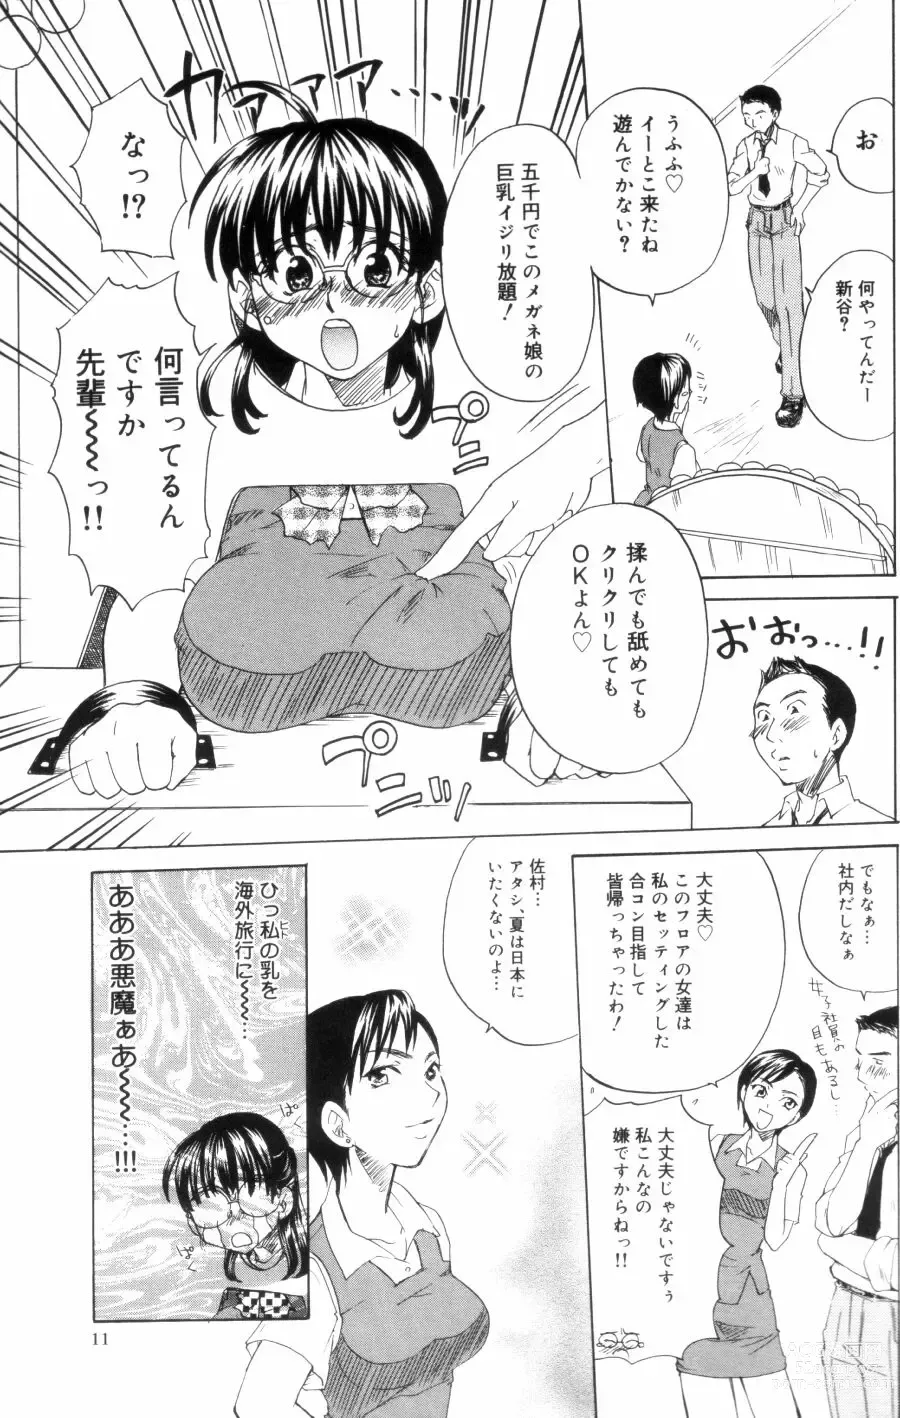 Page 11 of manga OL Frustrations